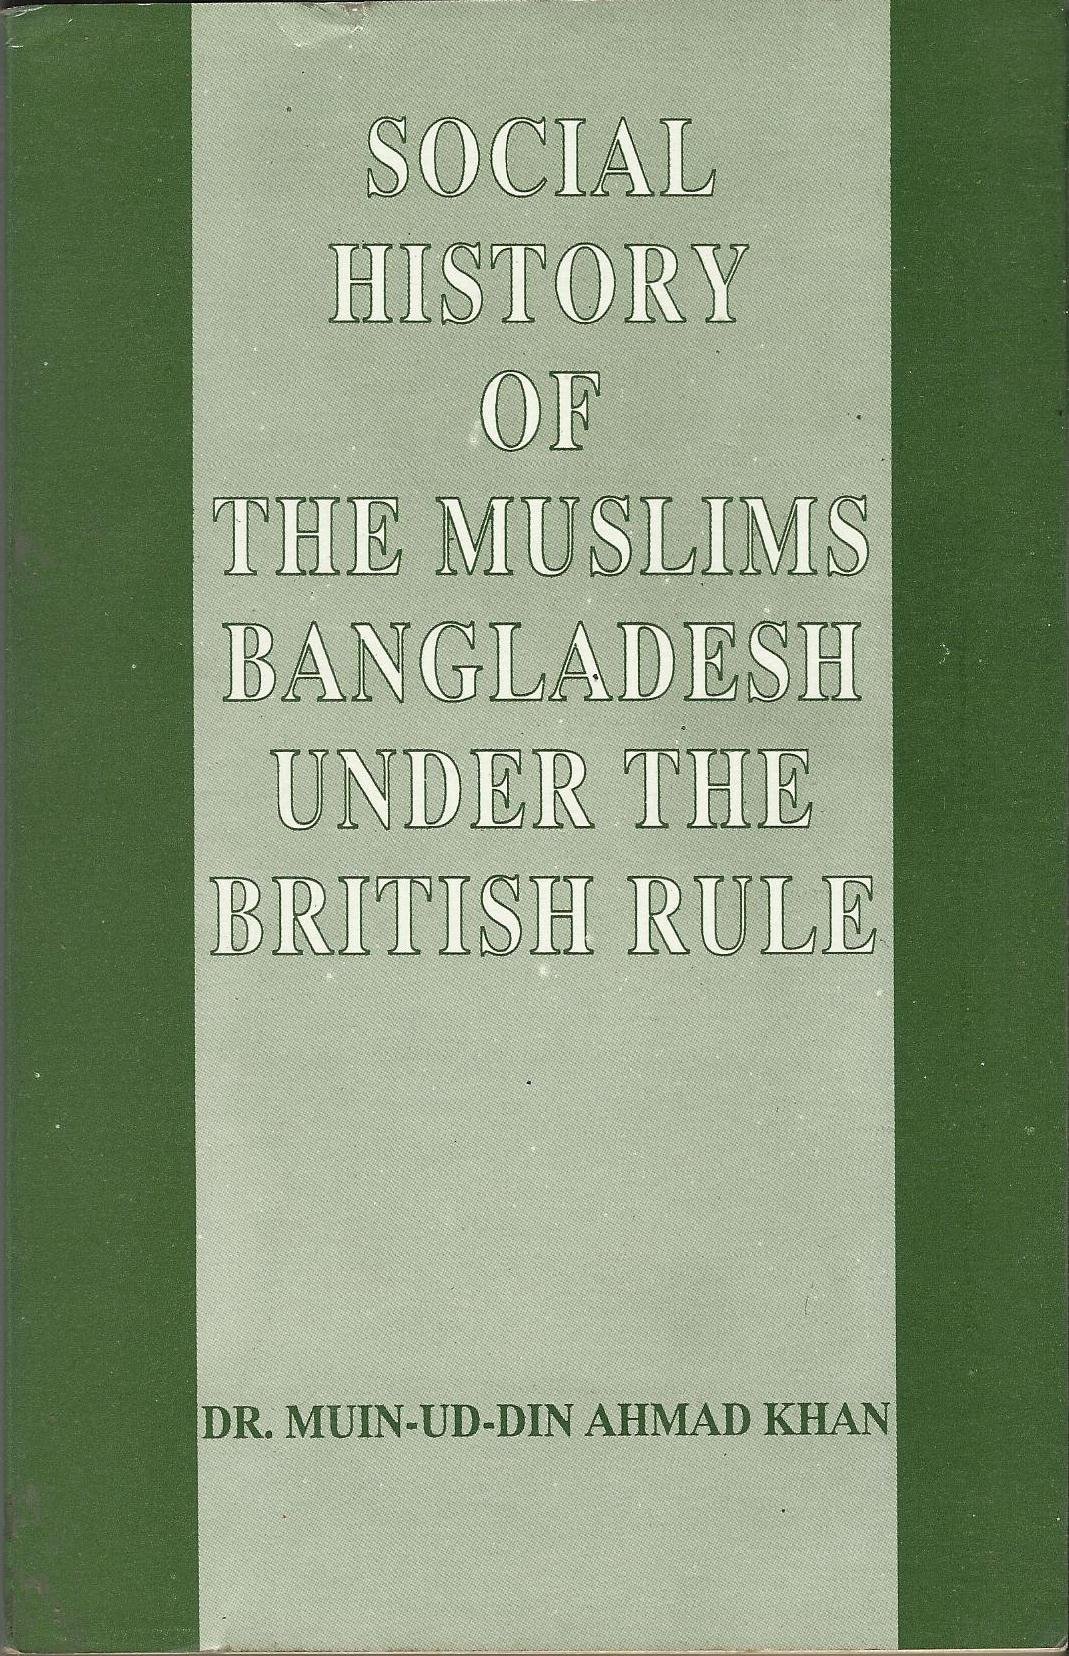 SOCIAL HISTORY OF THE MUSLIMS BANGLADESH UNDER THE BRITISH RULE